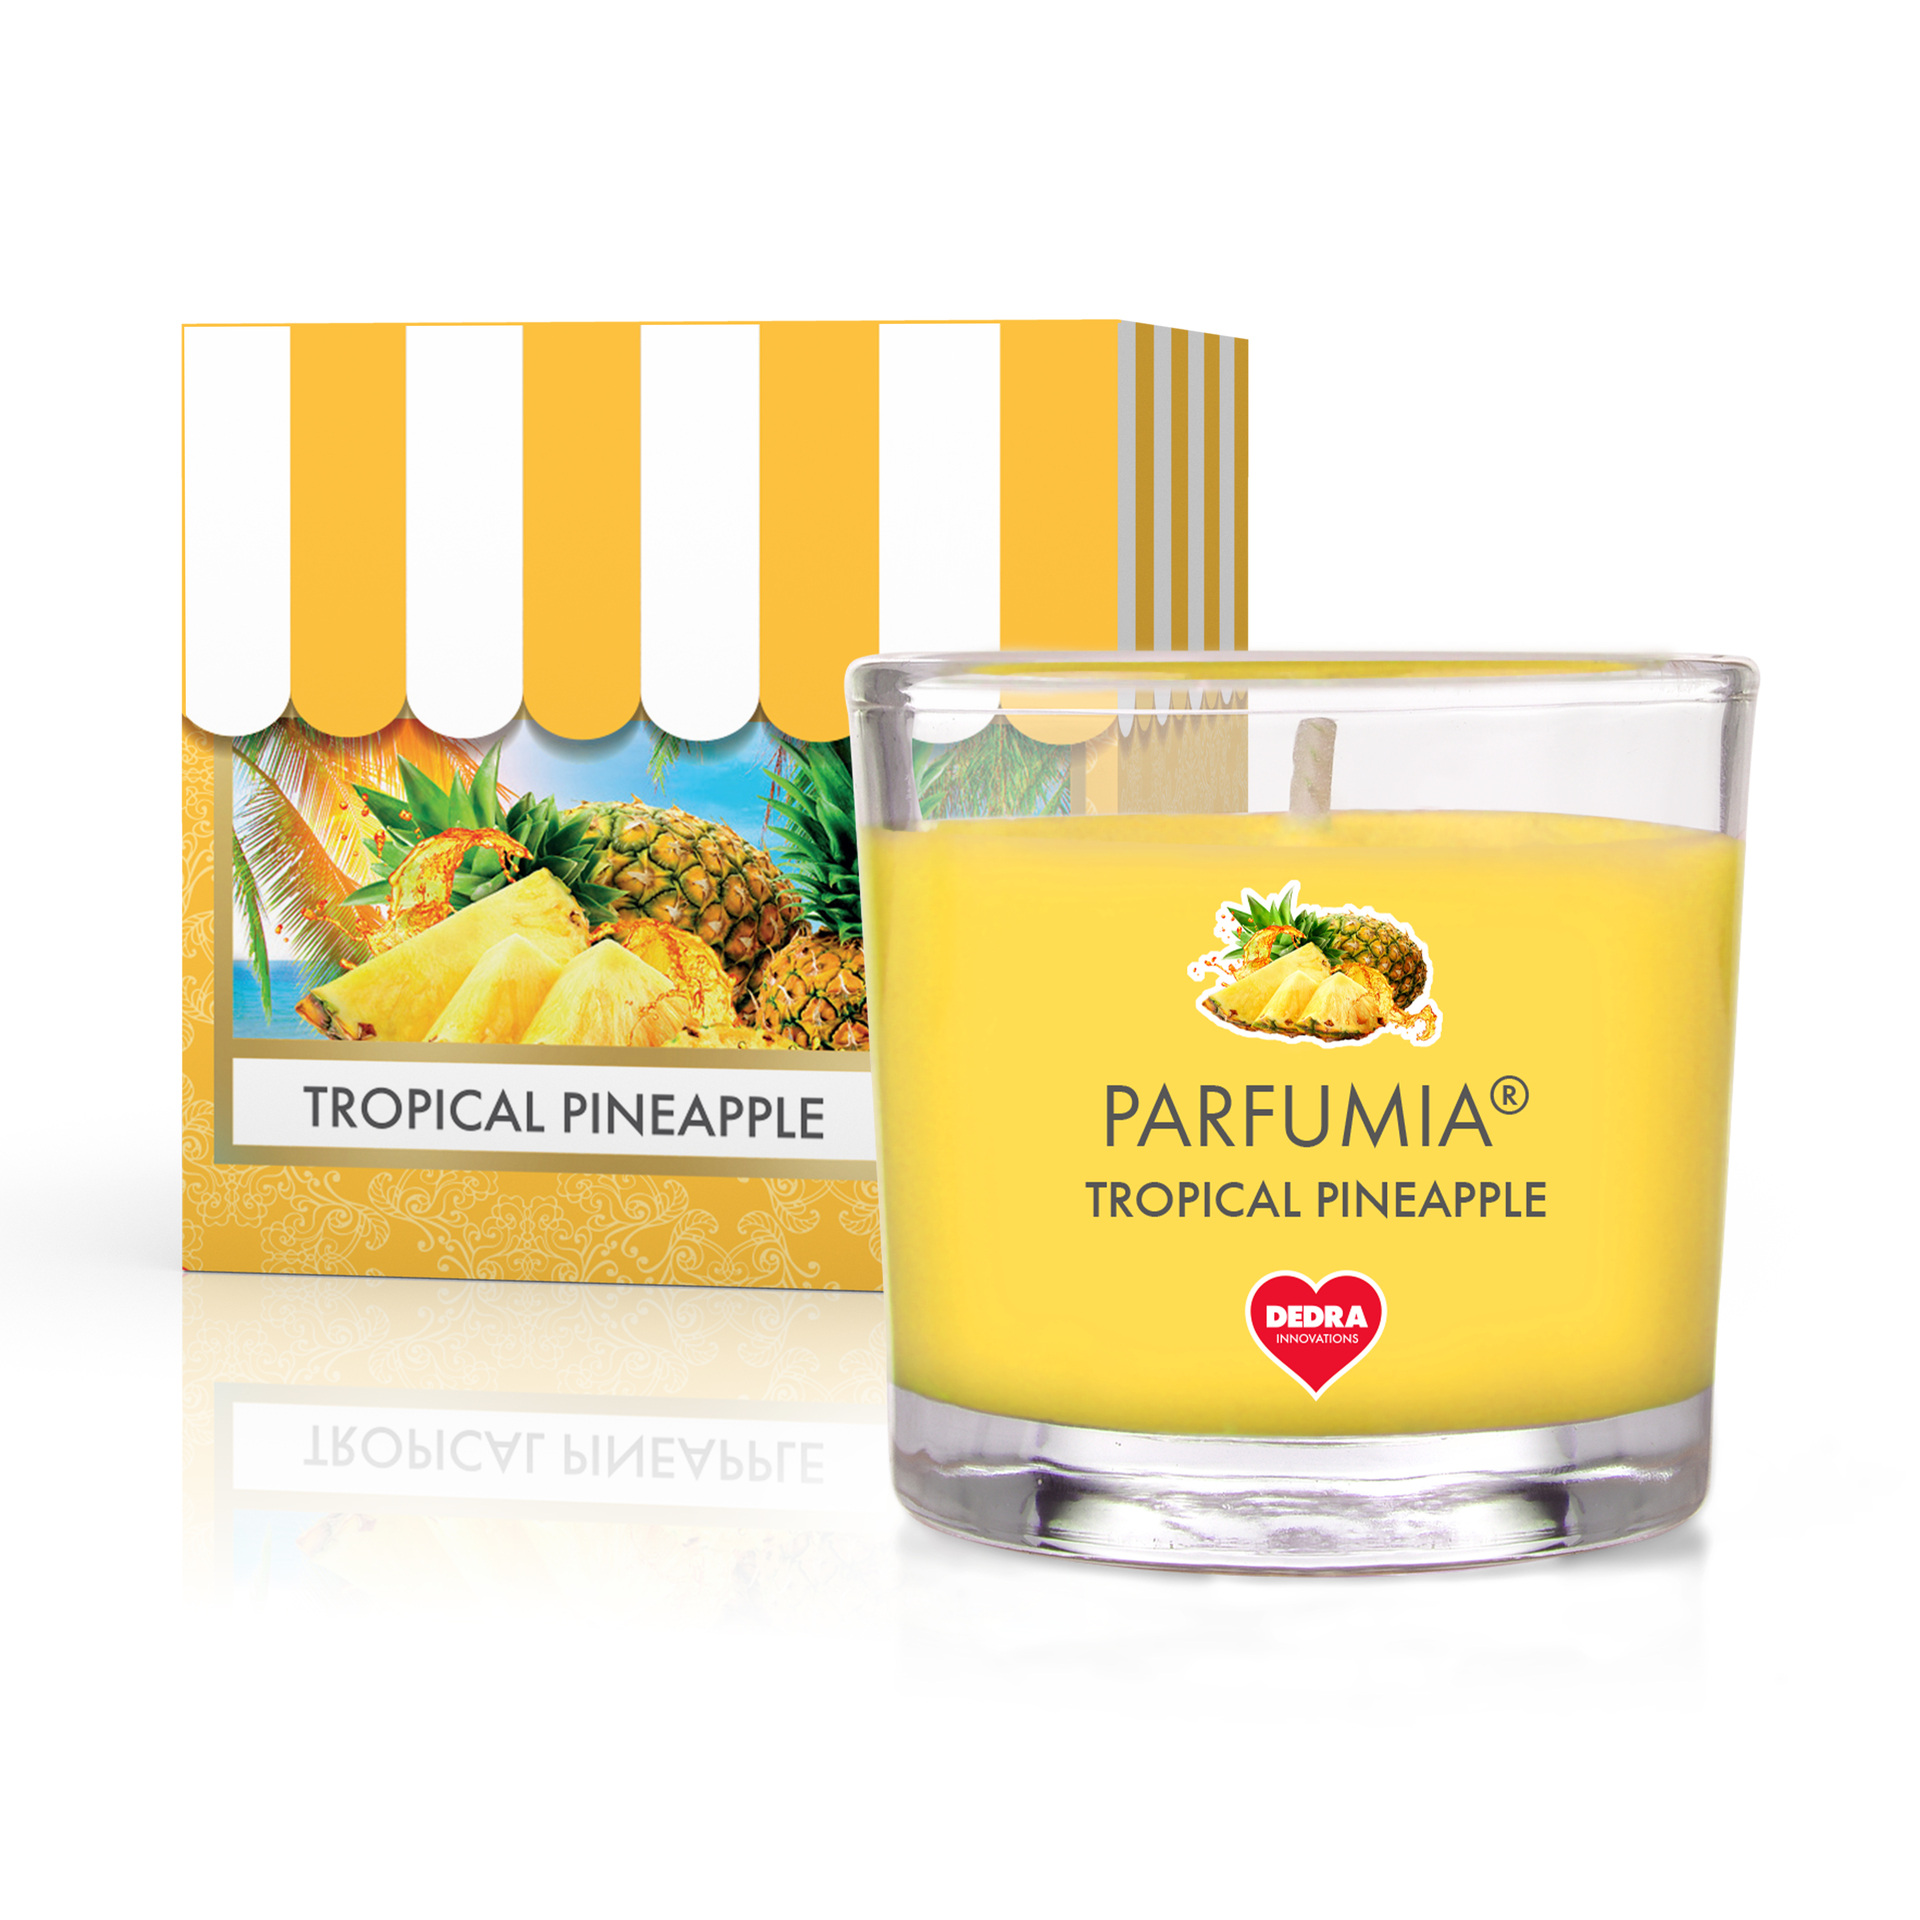 55 ml votivní sójová eko-svíce, tropický ananas Tropical pineapple, Parfumia